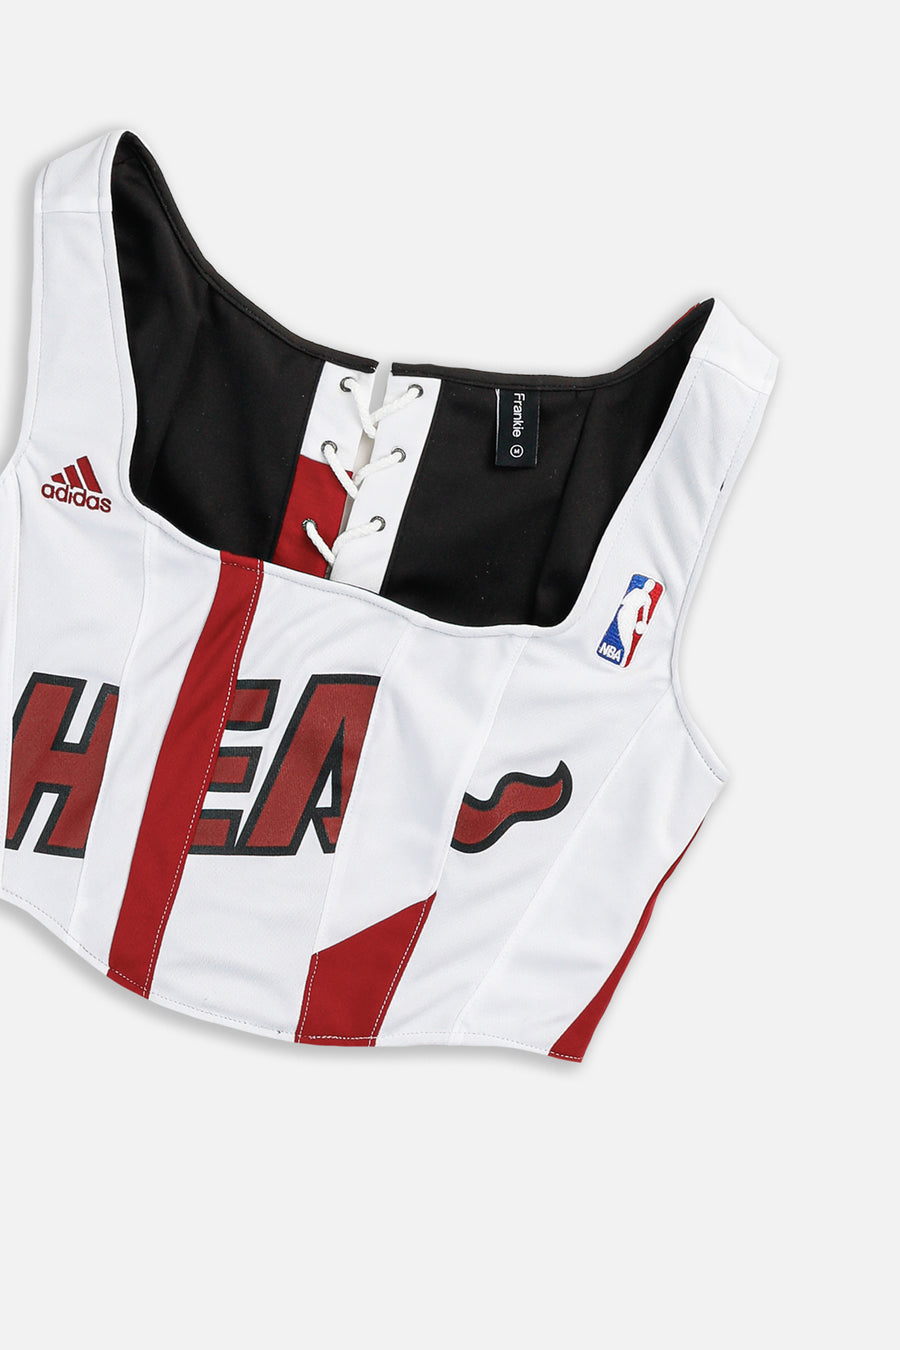 Rework Miami Heat NBA Corset - M